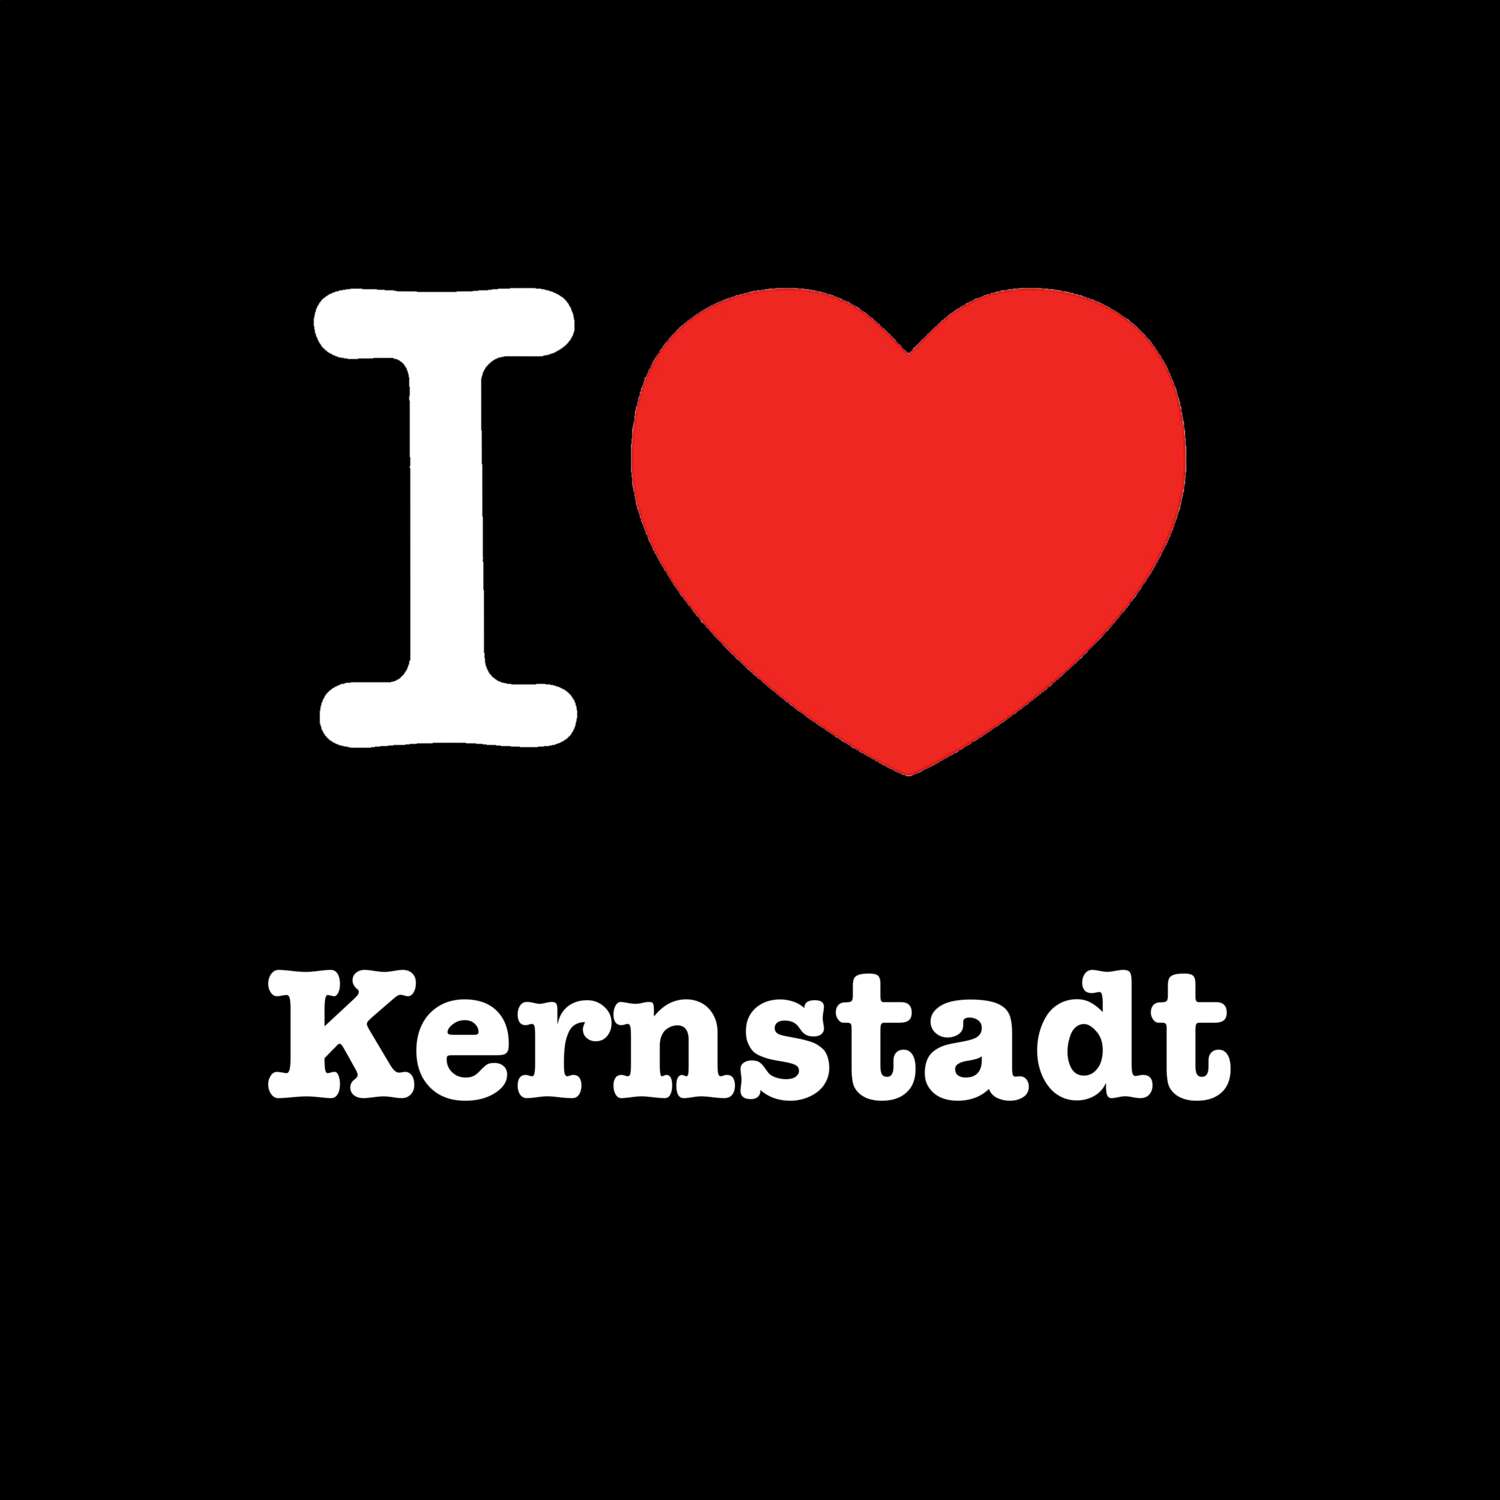 Kernstadt T-Shirt »I love«